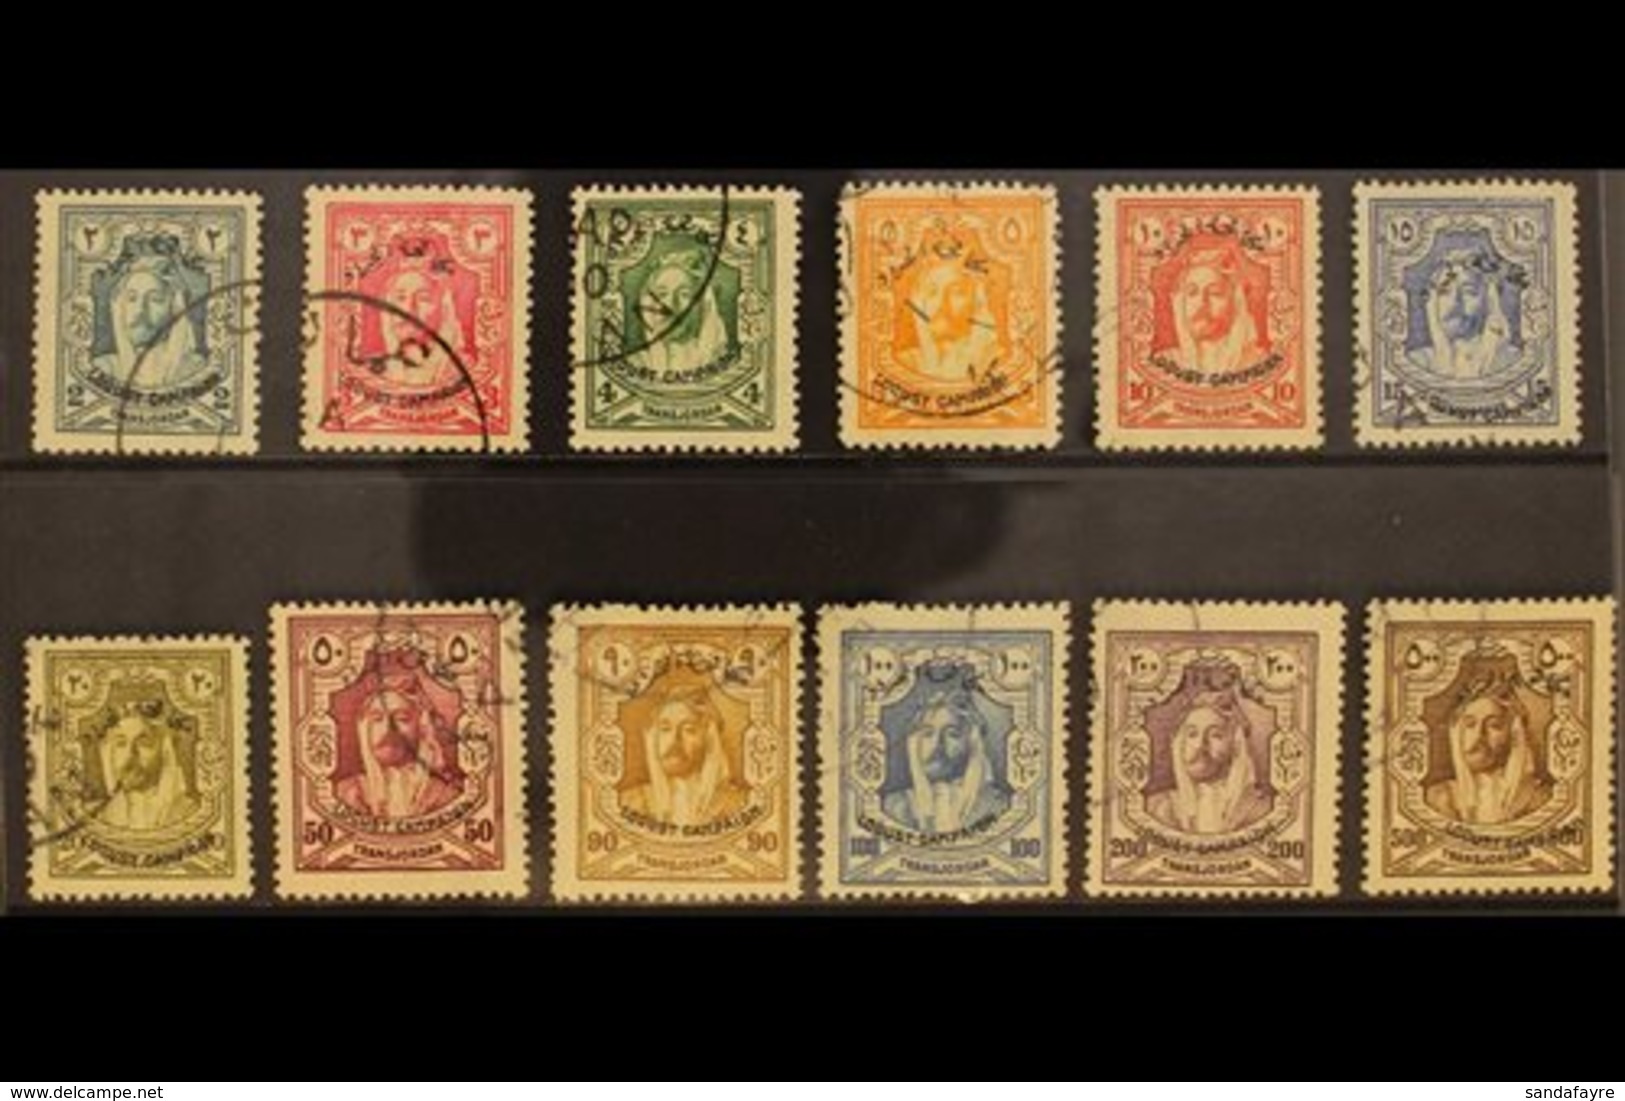 1930 LOCUST CAMPAIGN Emir "Locust Campaign" Overprinted Set, SG 183/94, Fine Used (12 Stamps) For More Images, Please Vi - Jordanië